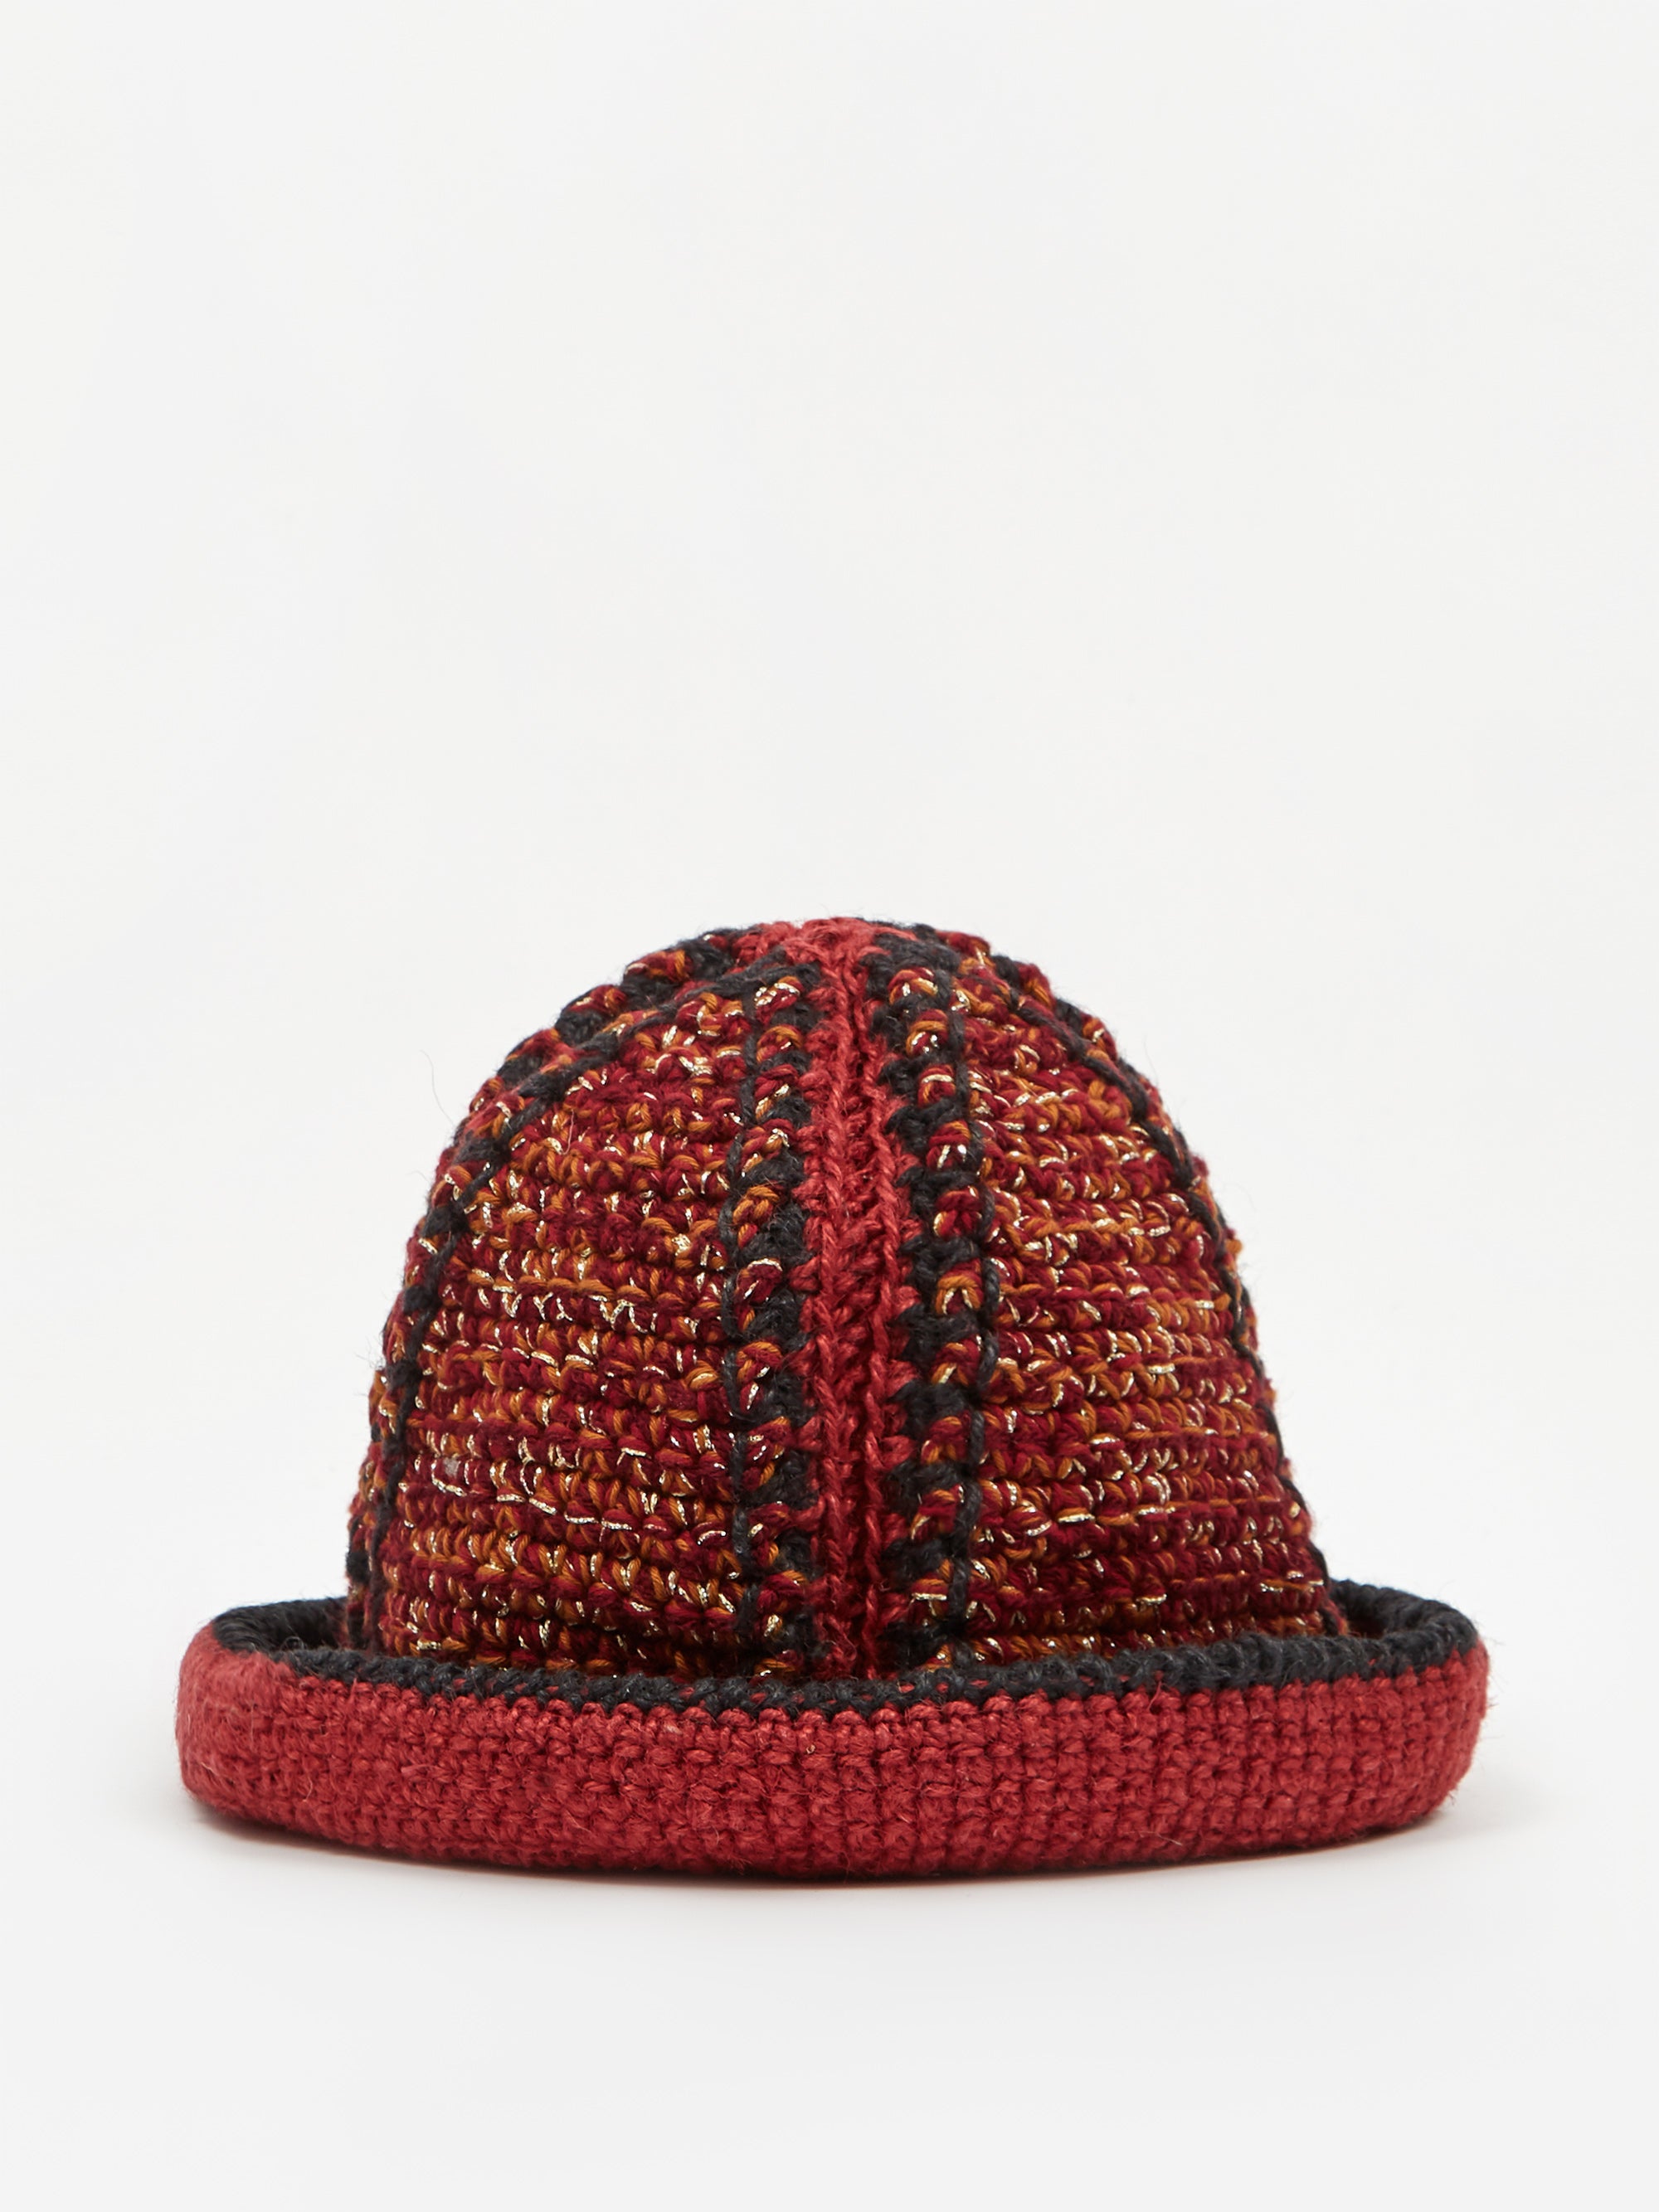 Nicholas Daley Hand Crochet Bucket Hat - Red/Black/Gold